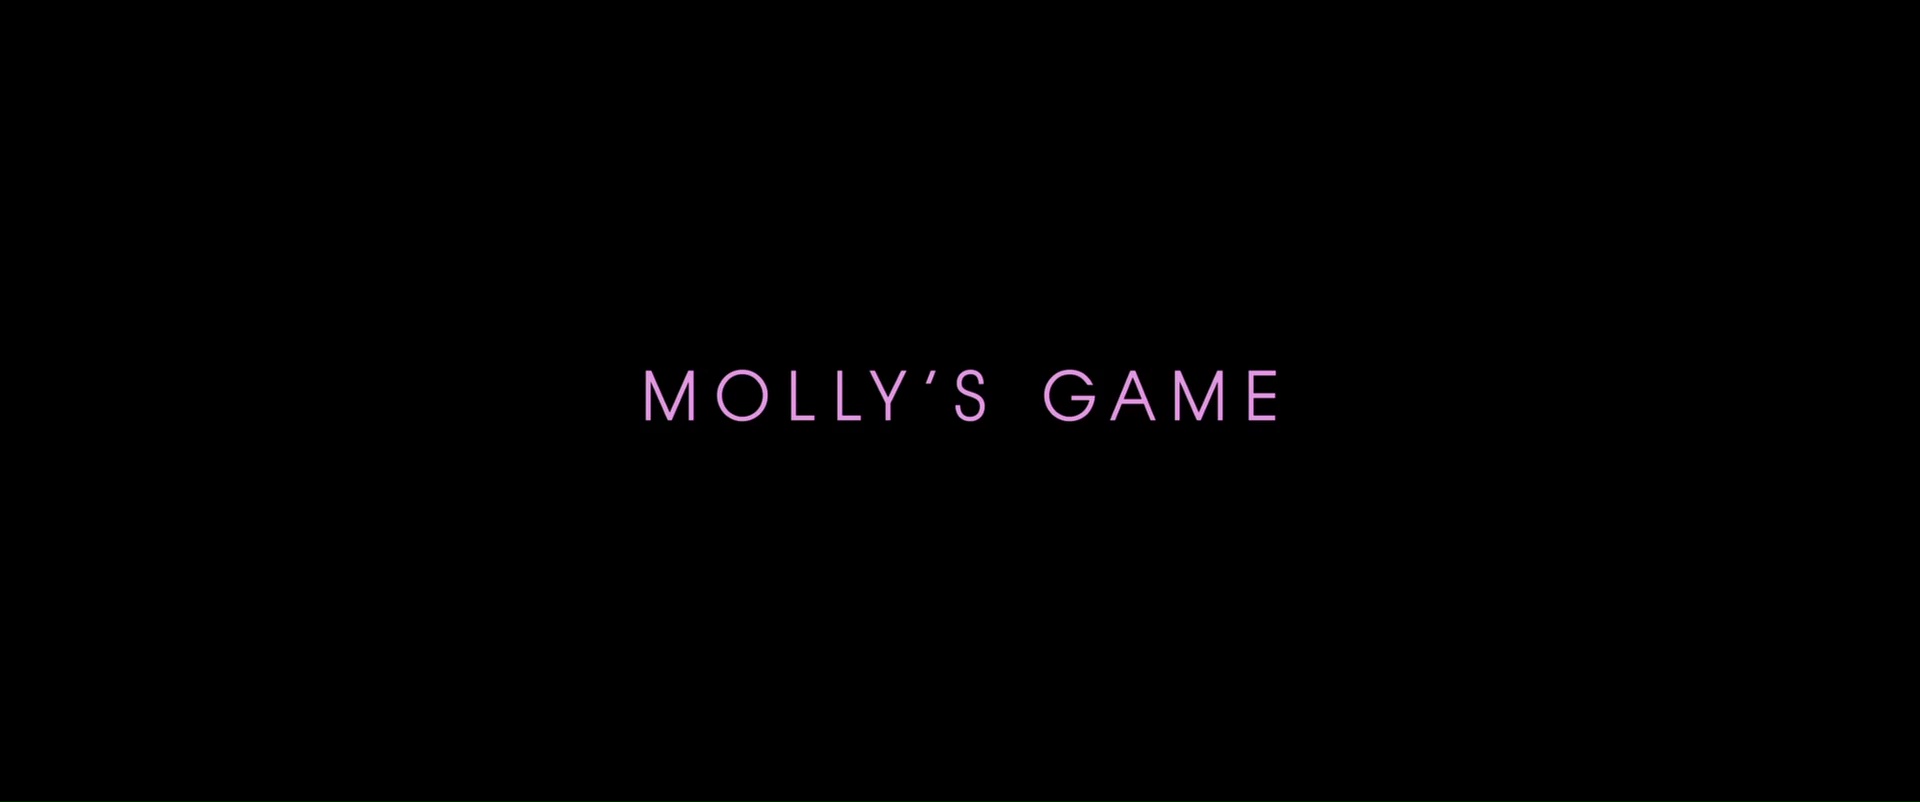 LE GRAND JEU (Molly’s Game) de Aaron Sorkin (2017)